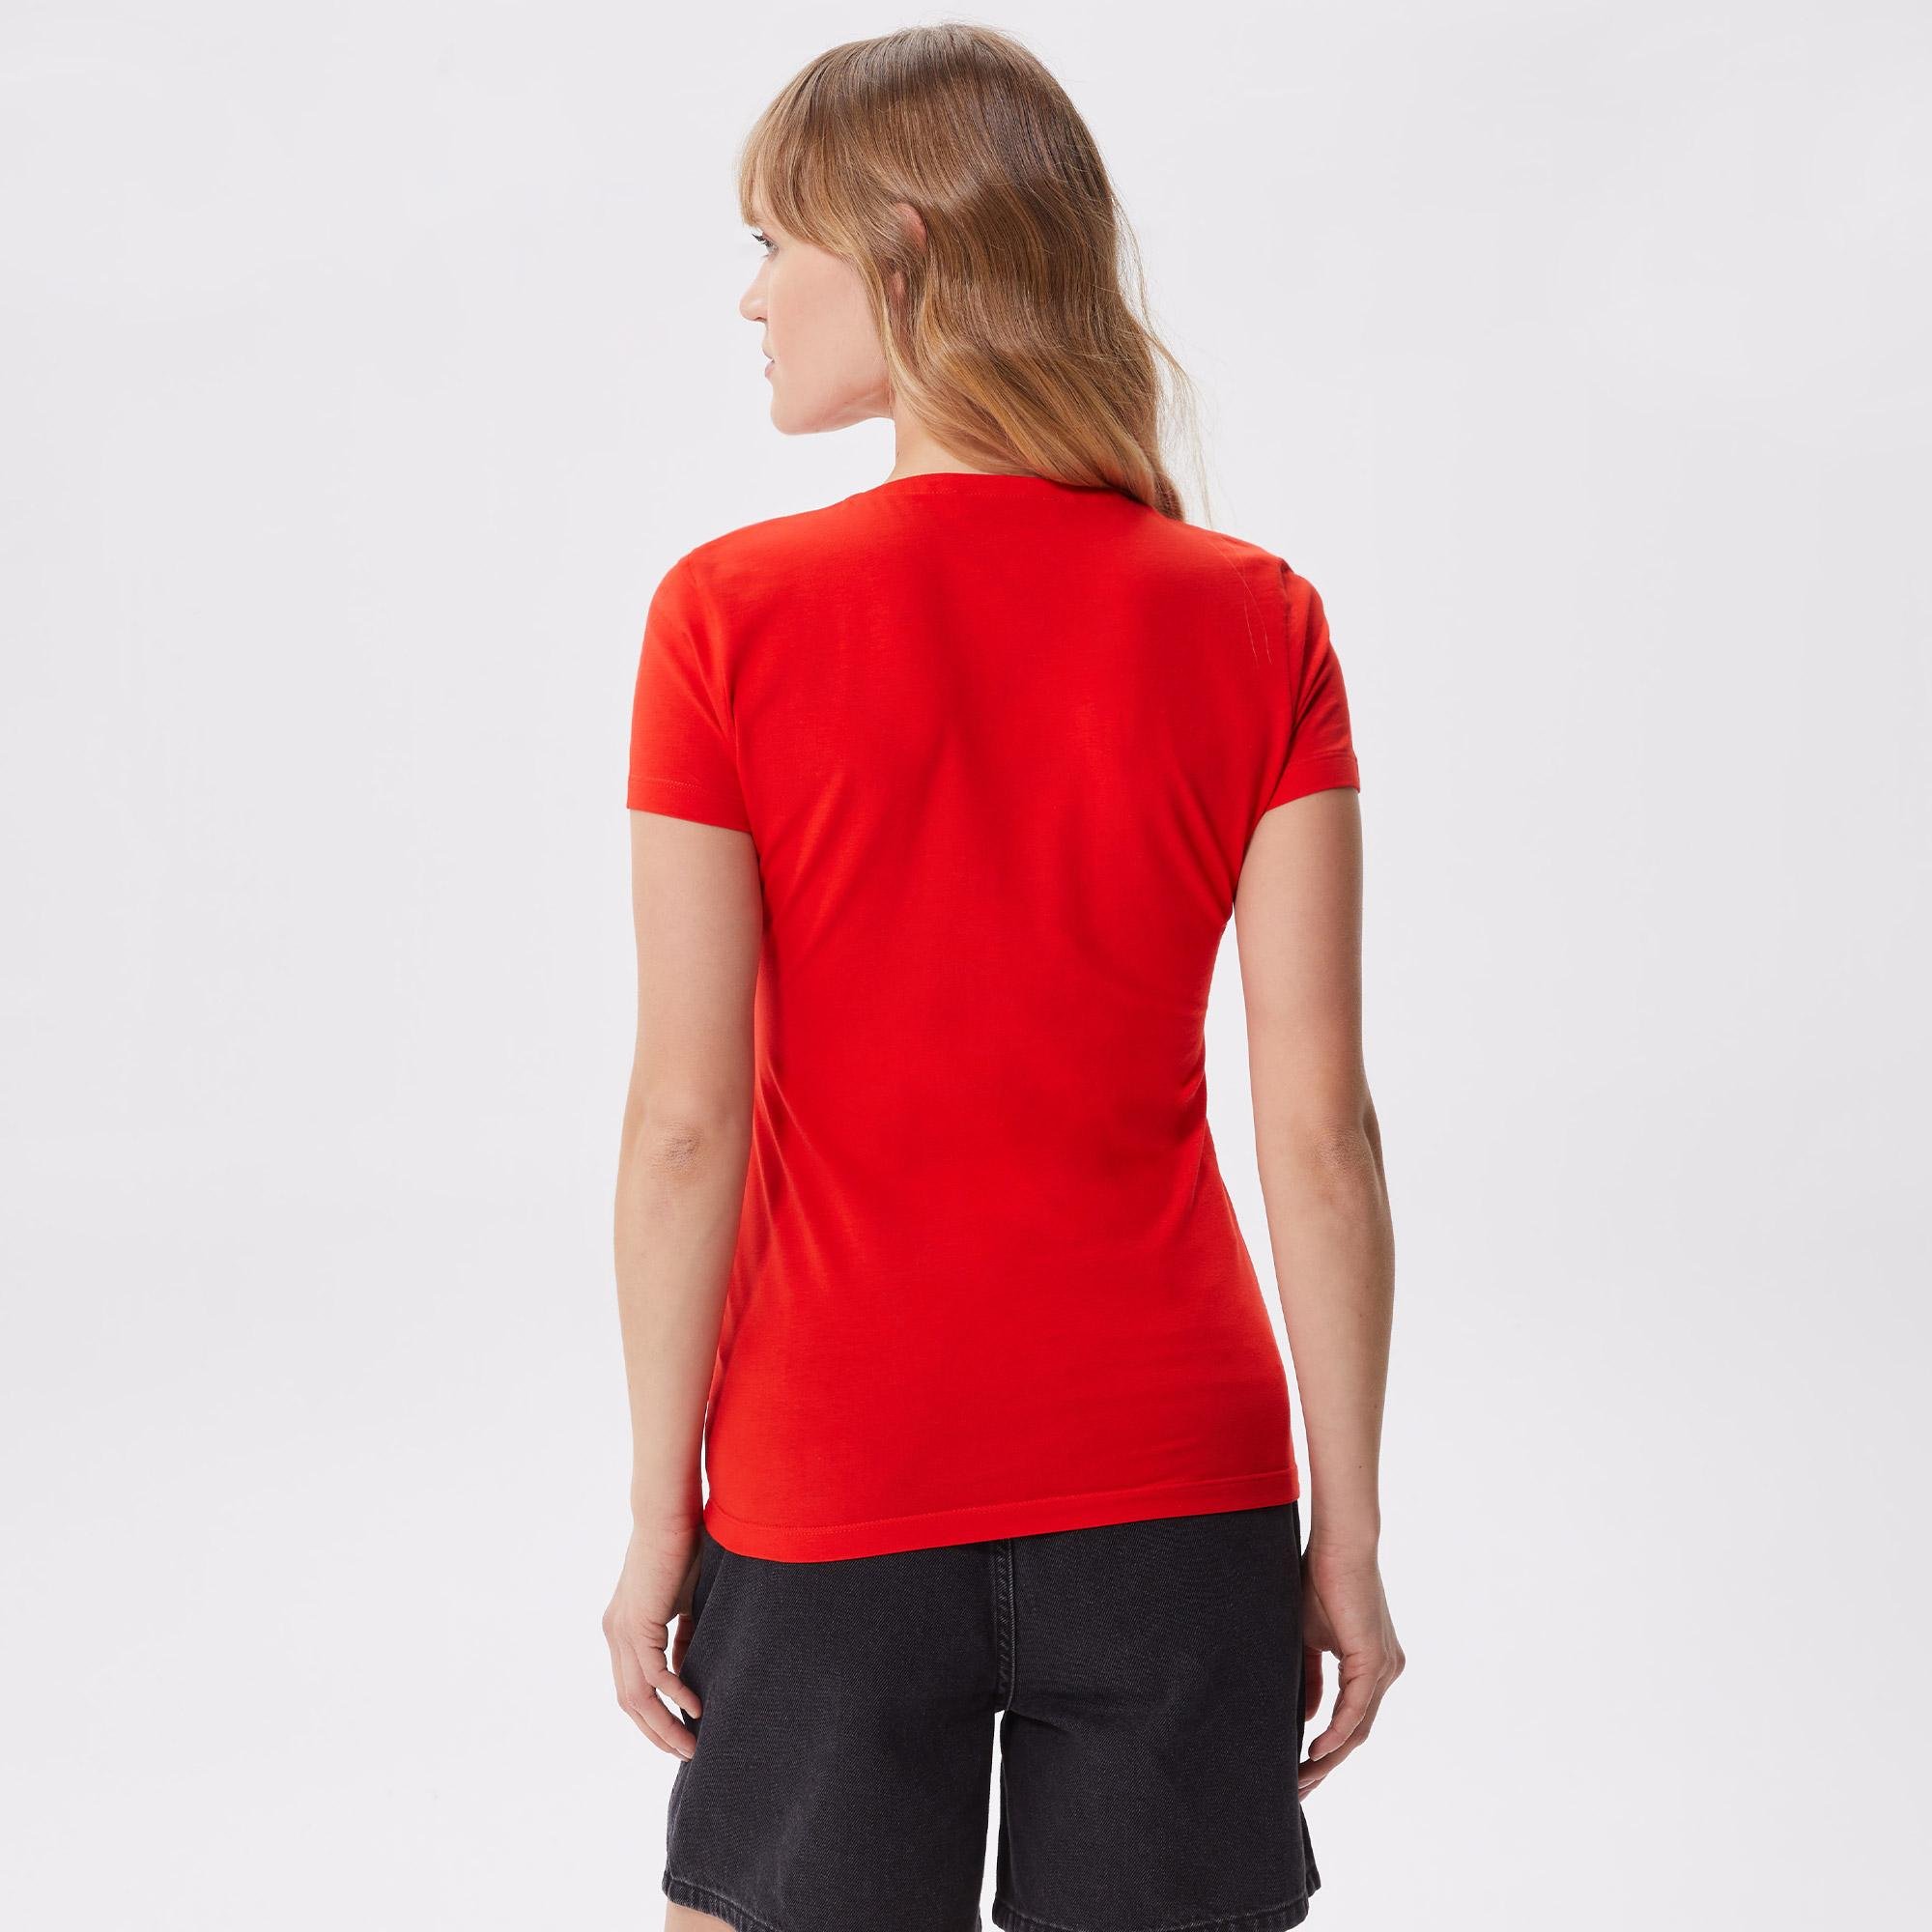 Lacoste Kadın Slim Fit V Yaka Kırmızı T-Shirt. 2